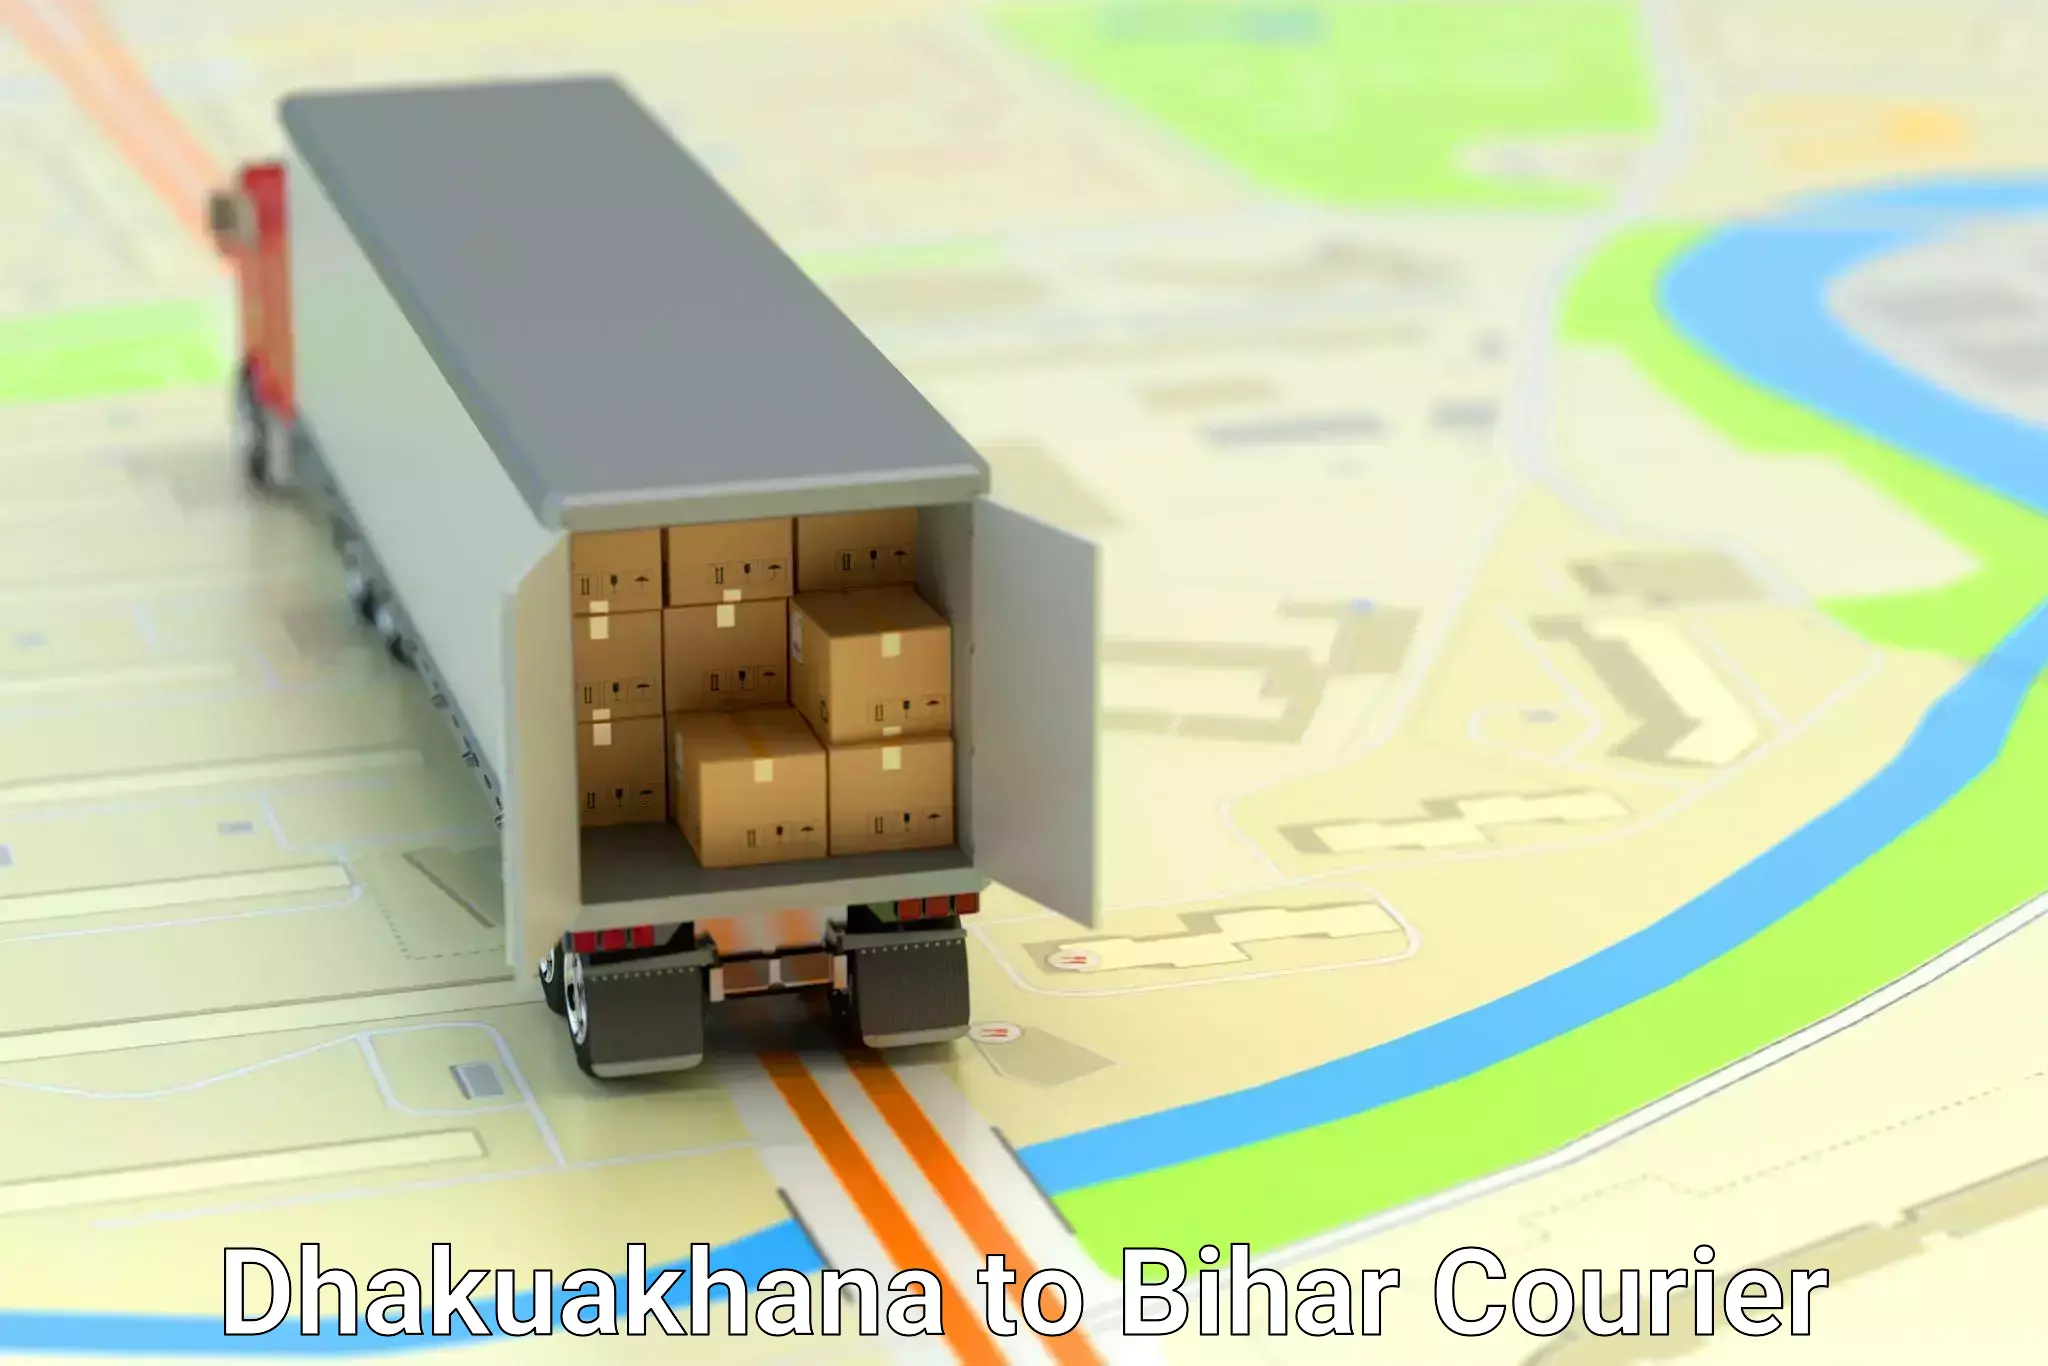 Global courier networks Dhakuakhana to Bihar